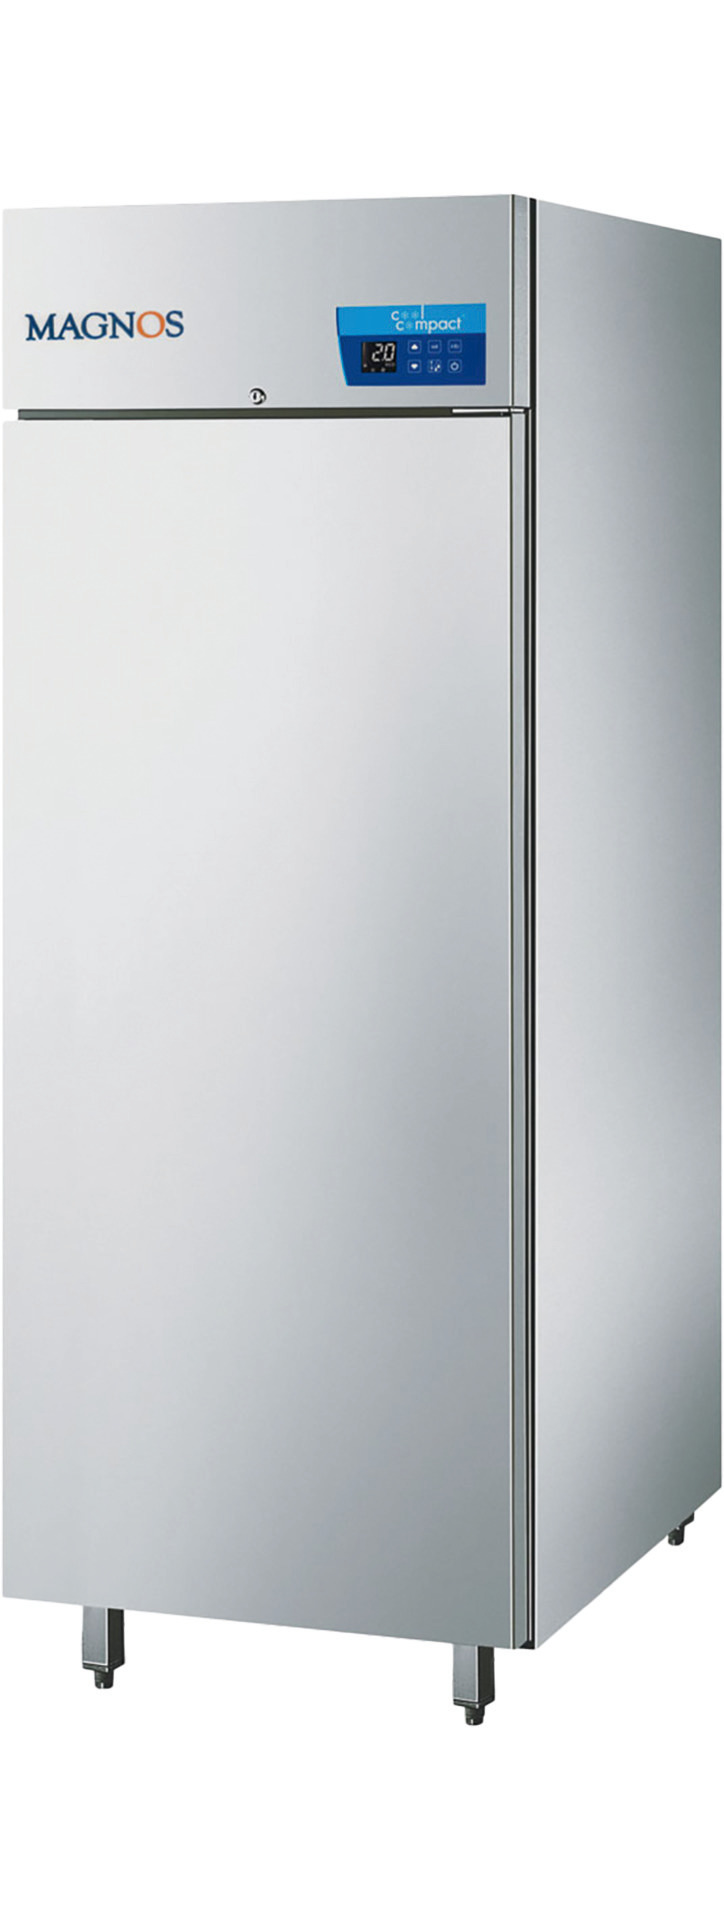 Umluft-Kühlschrank 23 x GN 2/1 /  Magnos / steckerfertig